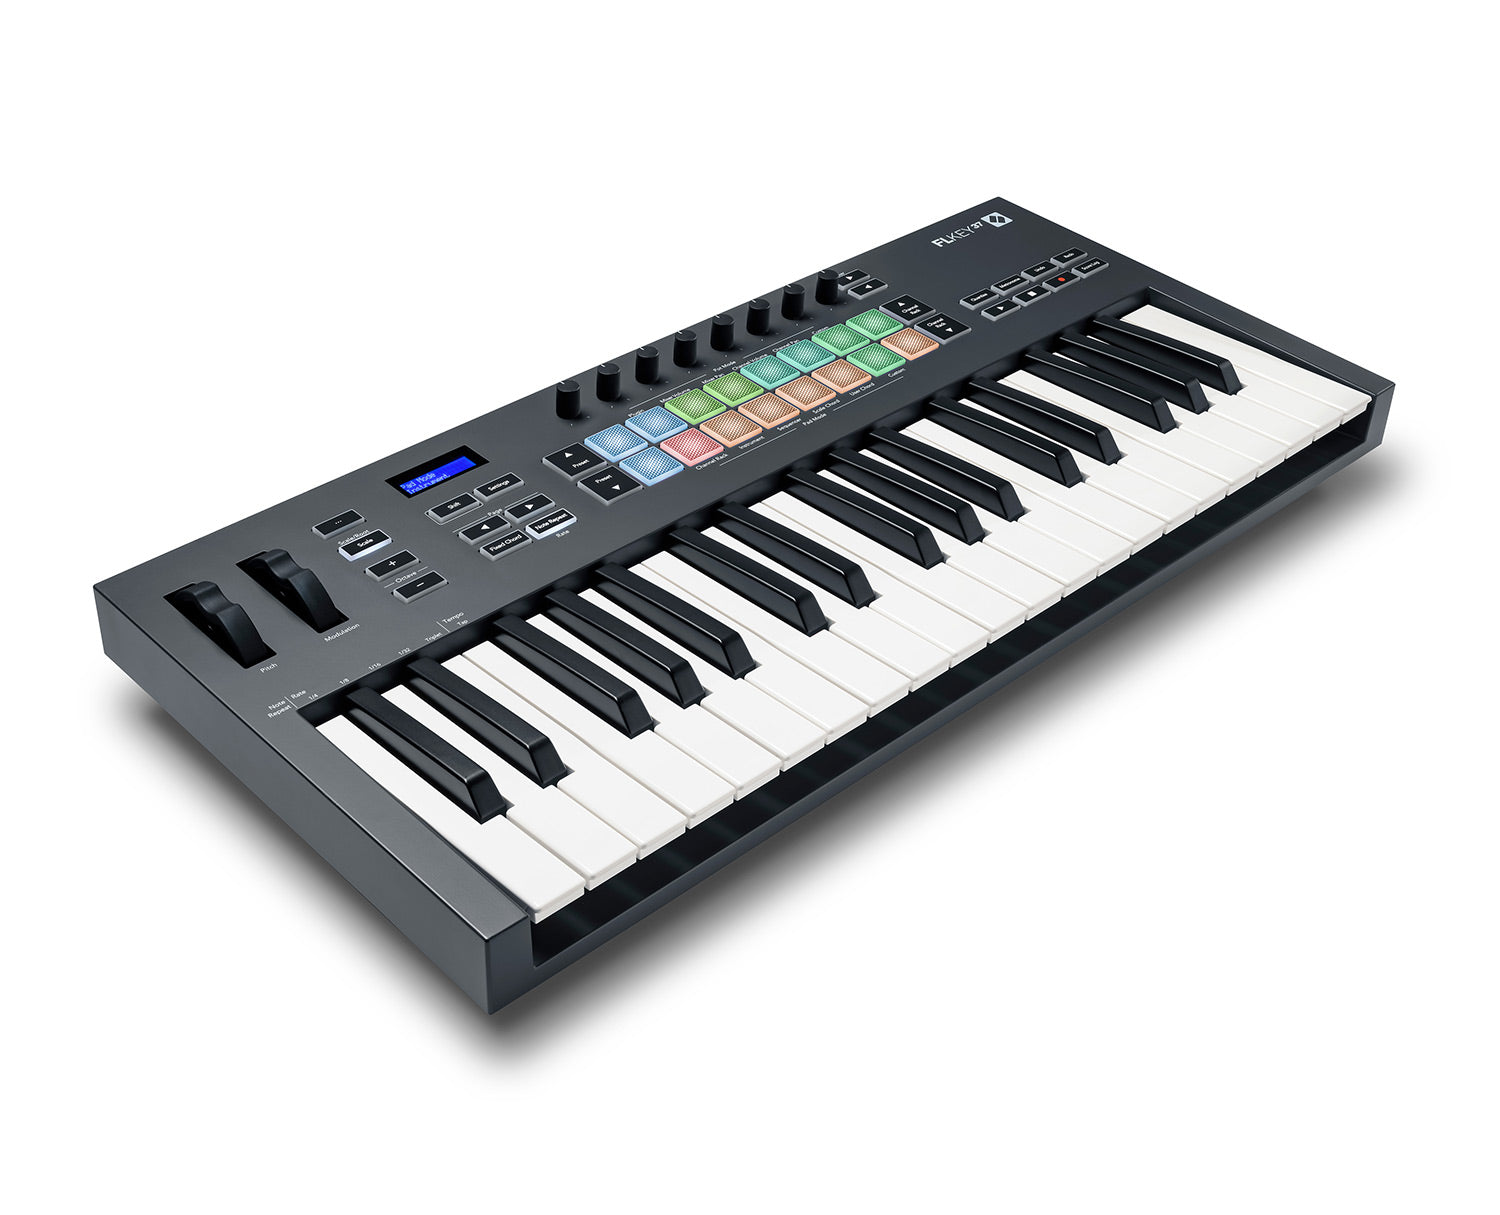 Novation FLkey - MIDI Keyboard Controller